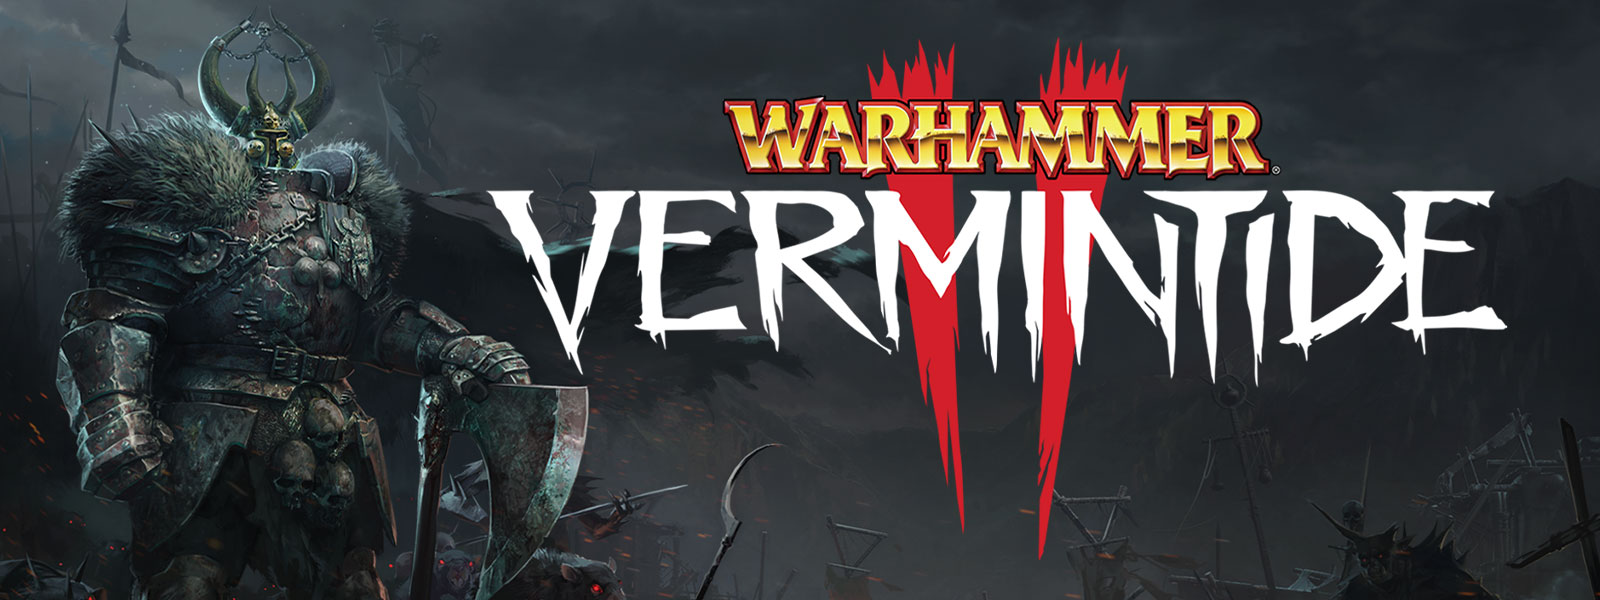 《Warhammer: Vermintide 2》，一个带着毛皮肩甲的装甲人物站在一群眼睛发亮的老鼠大军先锋队前面。